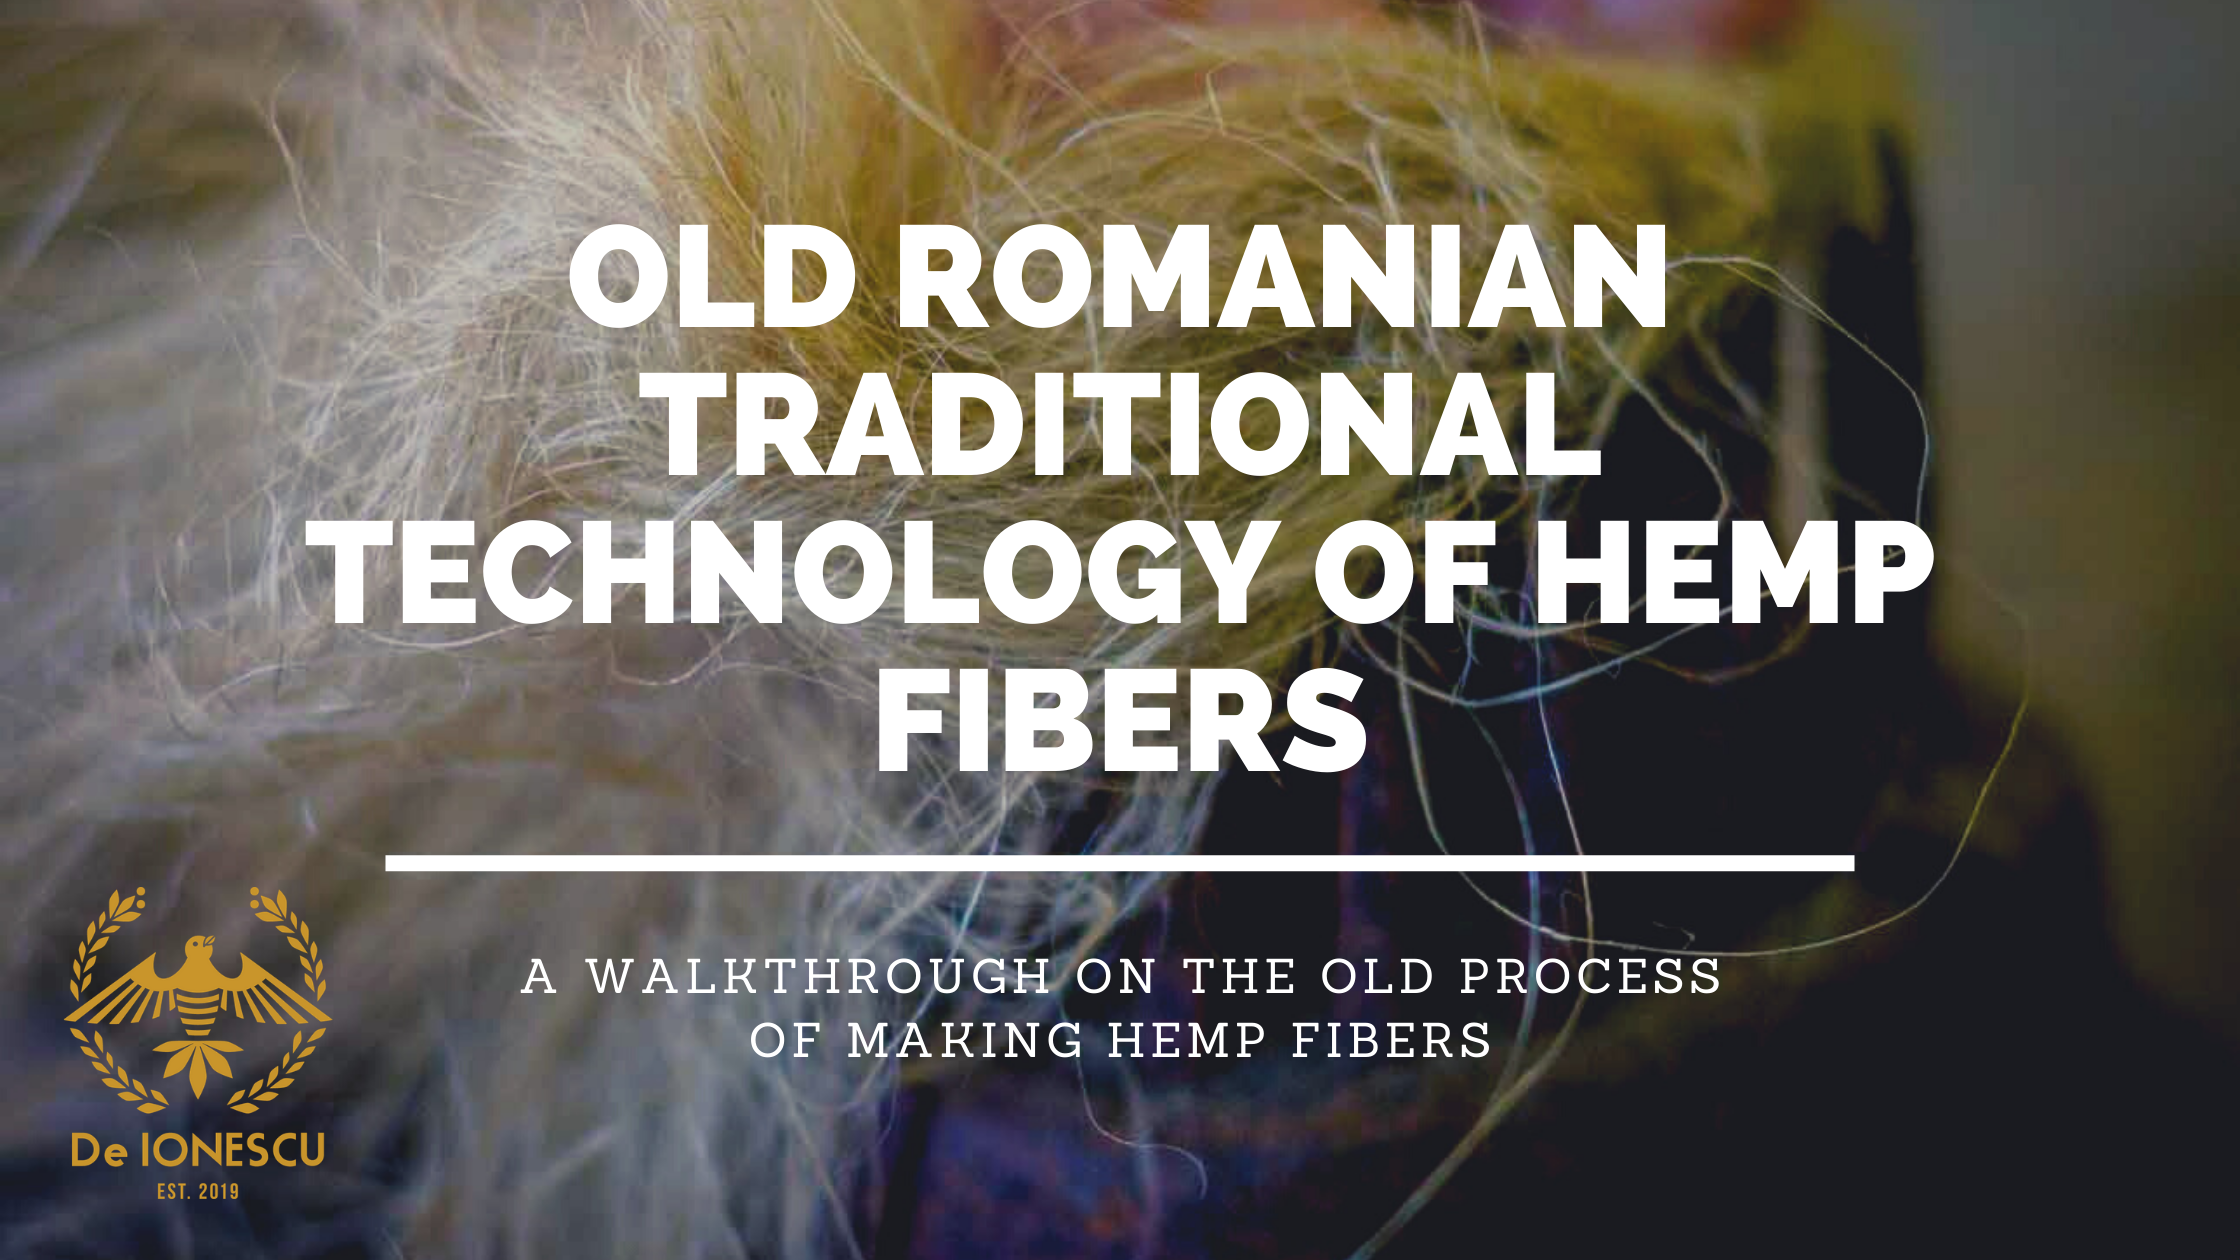 Old Romanian Traditional Technology of hemp fibers